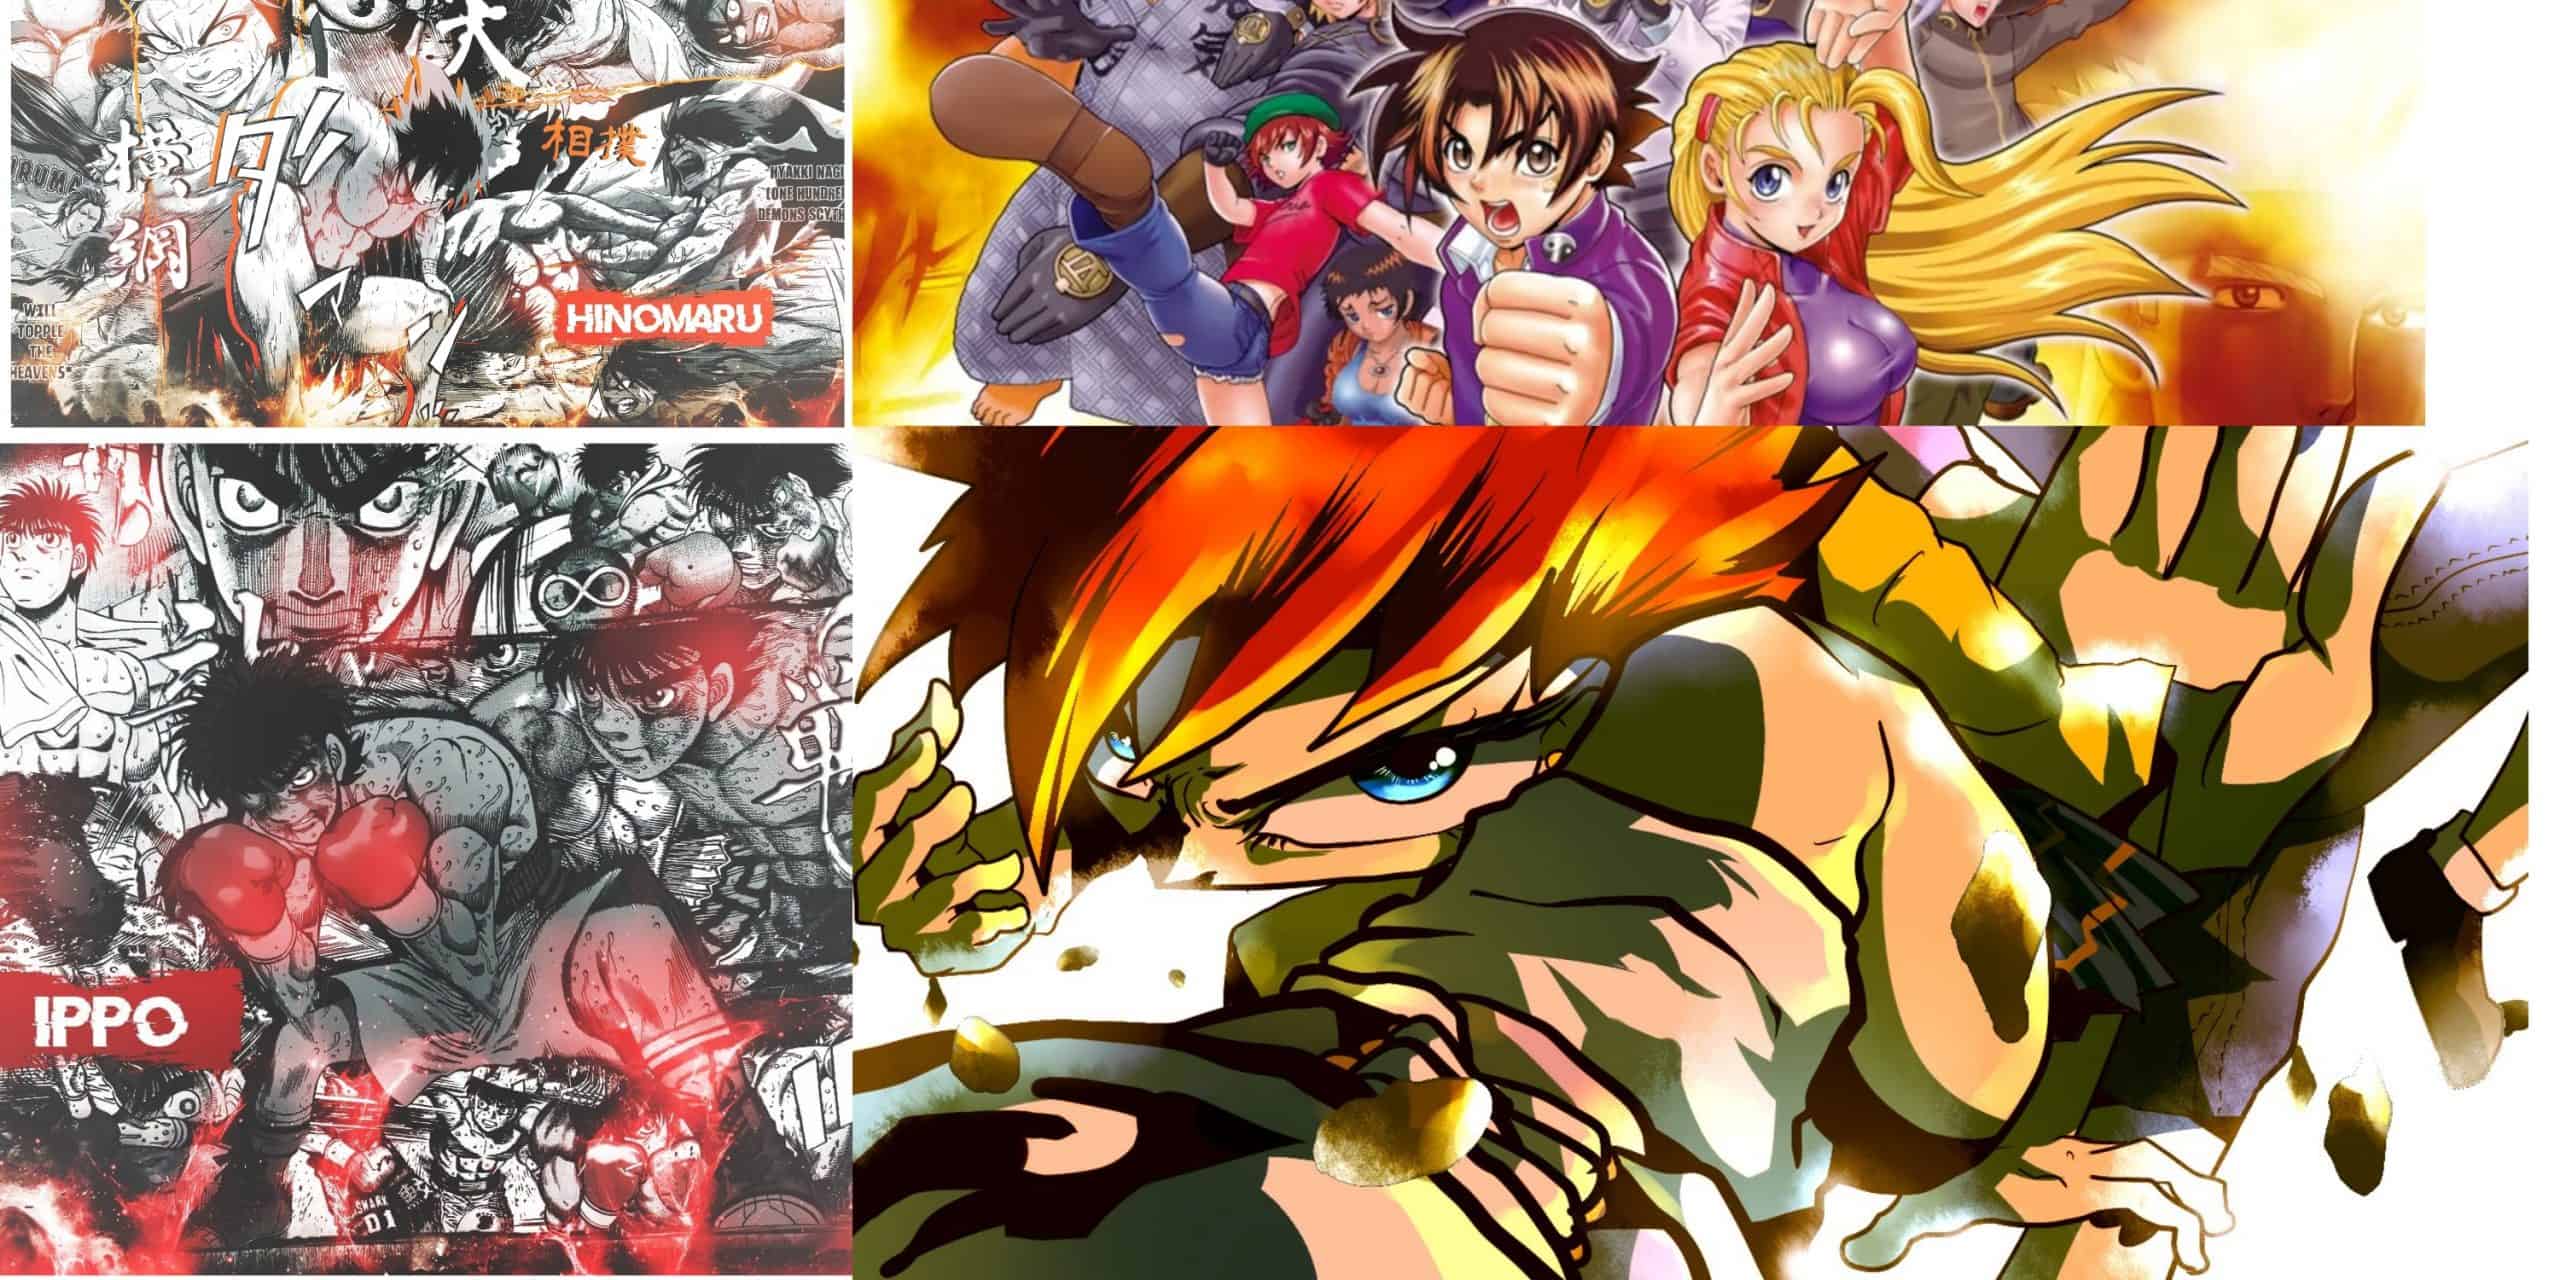 Top 10 Fighting Anime Like Baki on Netflix Ranked - OtakusNotes